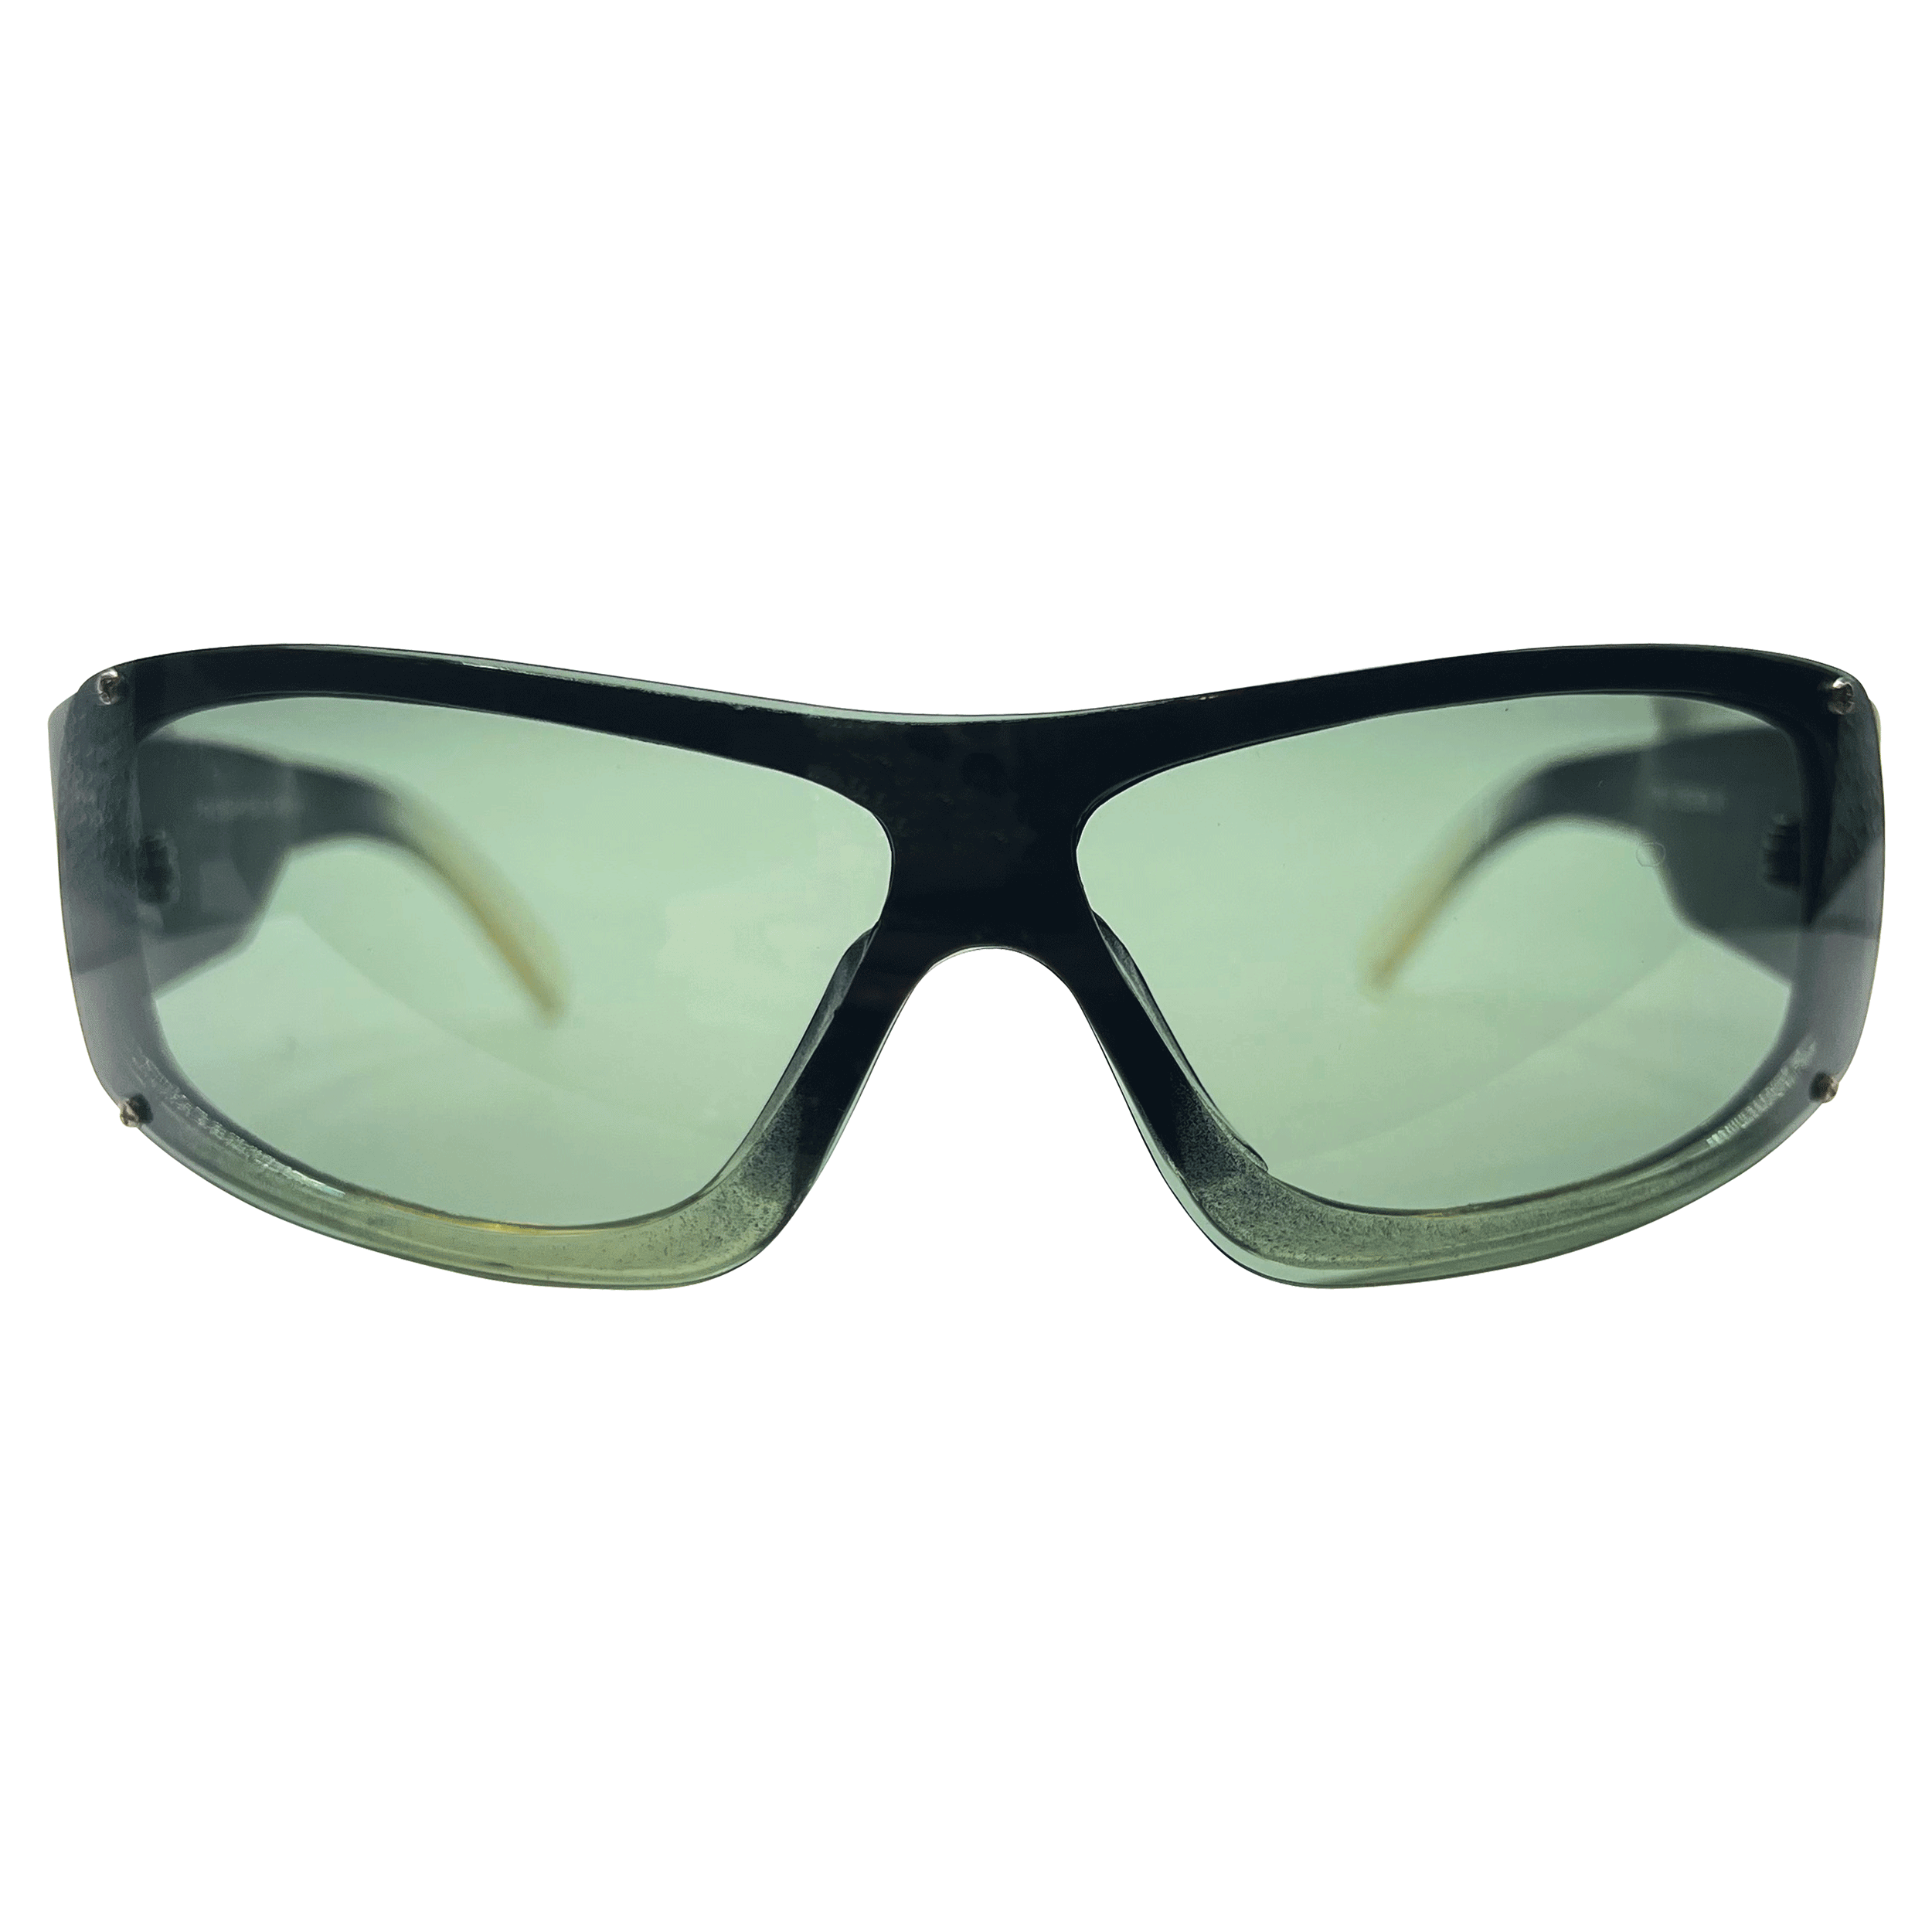 GONZALEZ Black/Green Sports Sunglasses